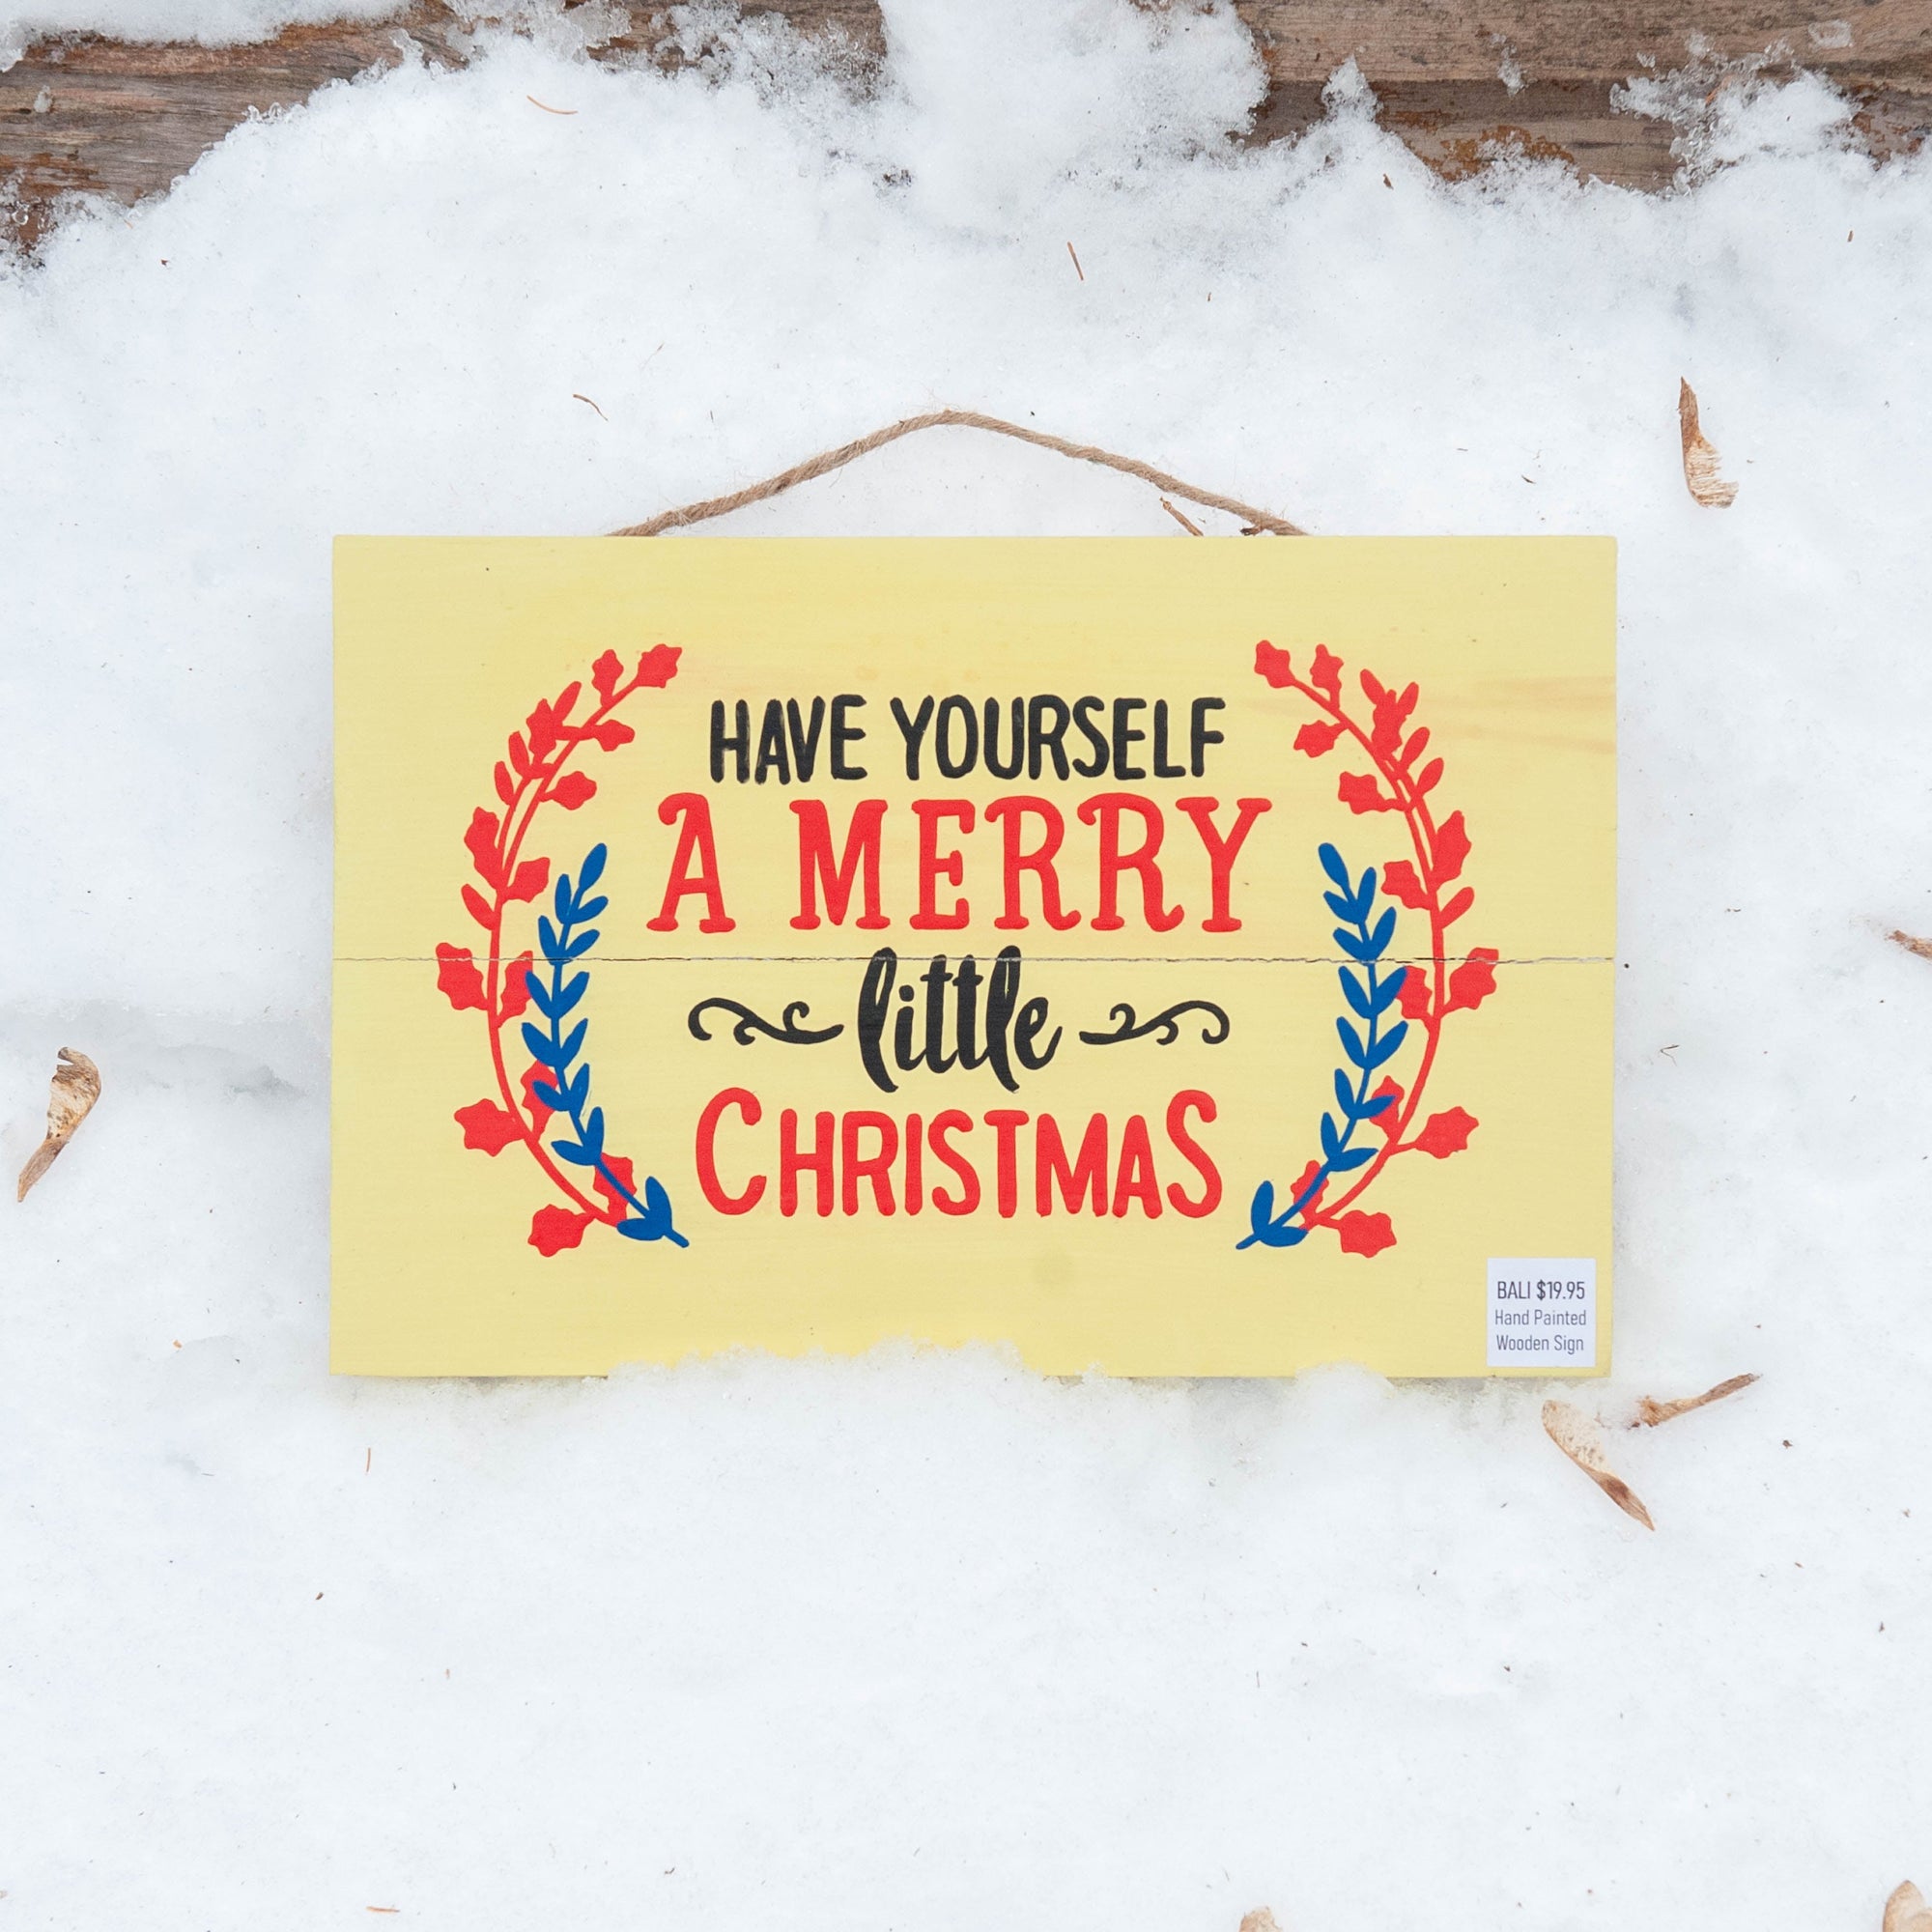 Petite enseigne en bois "Have Yourself a Merry Little Christmas"